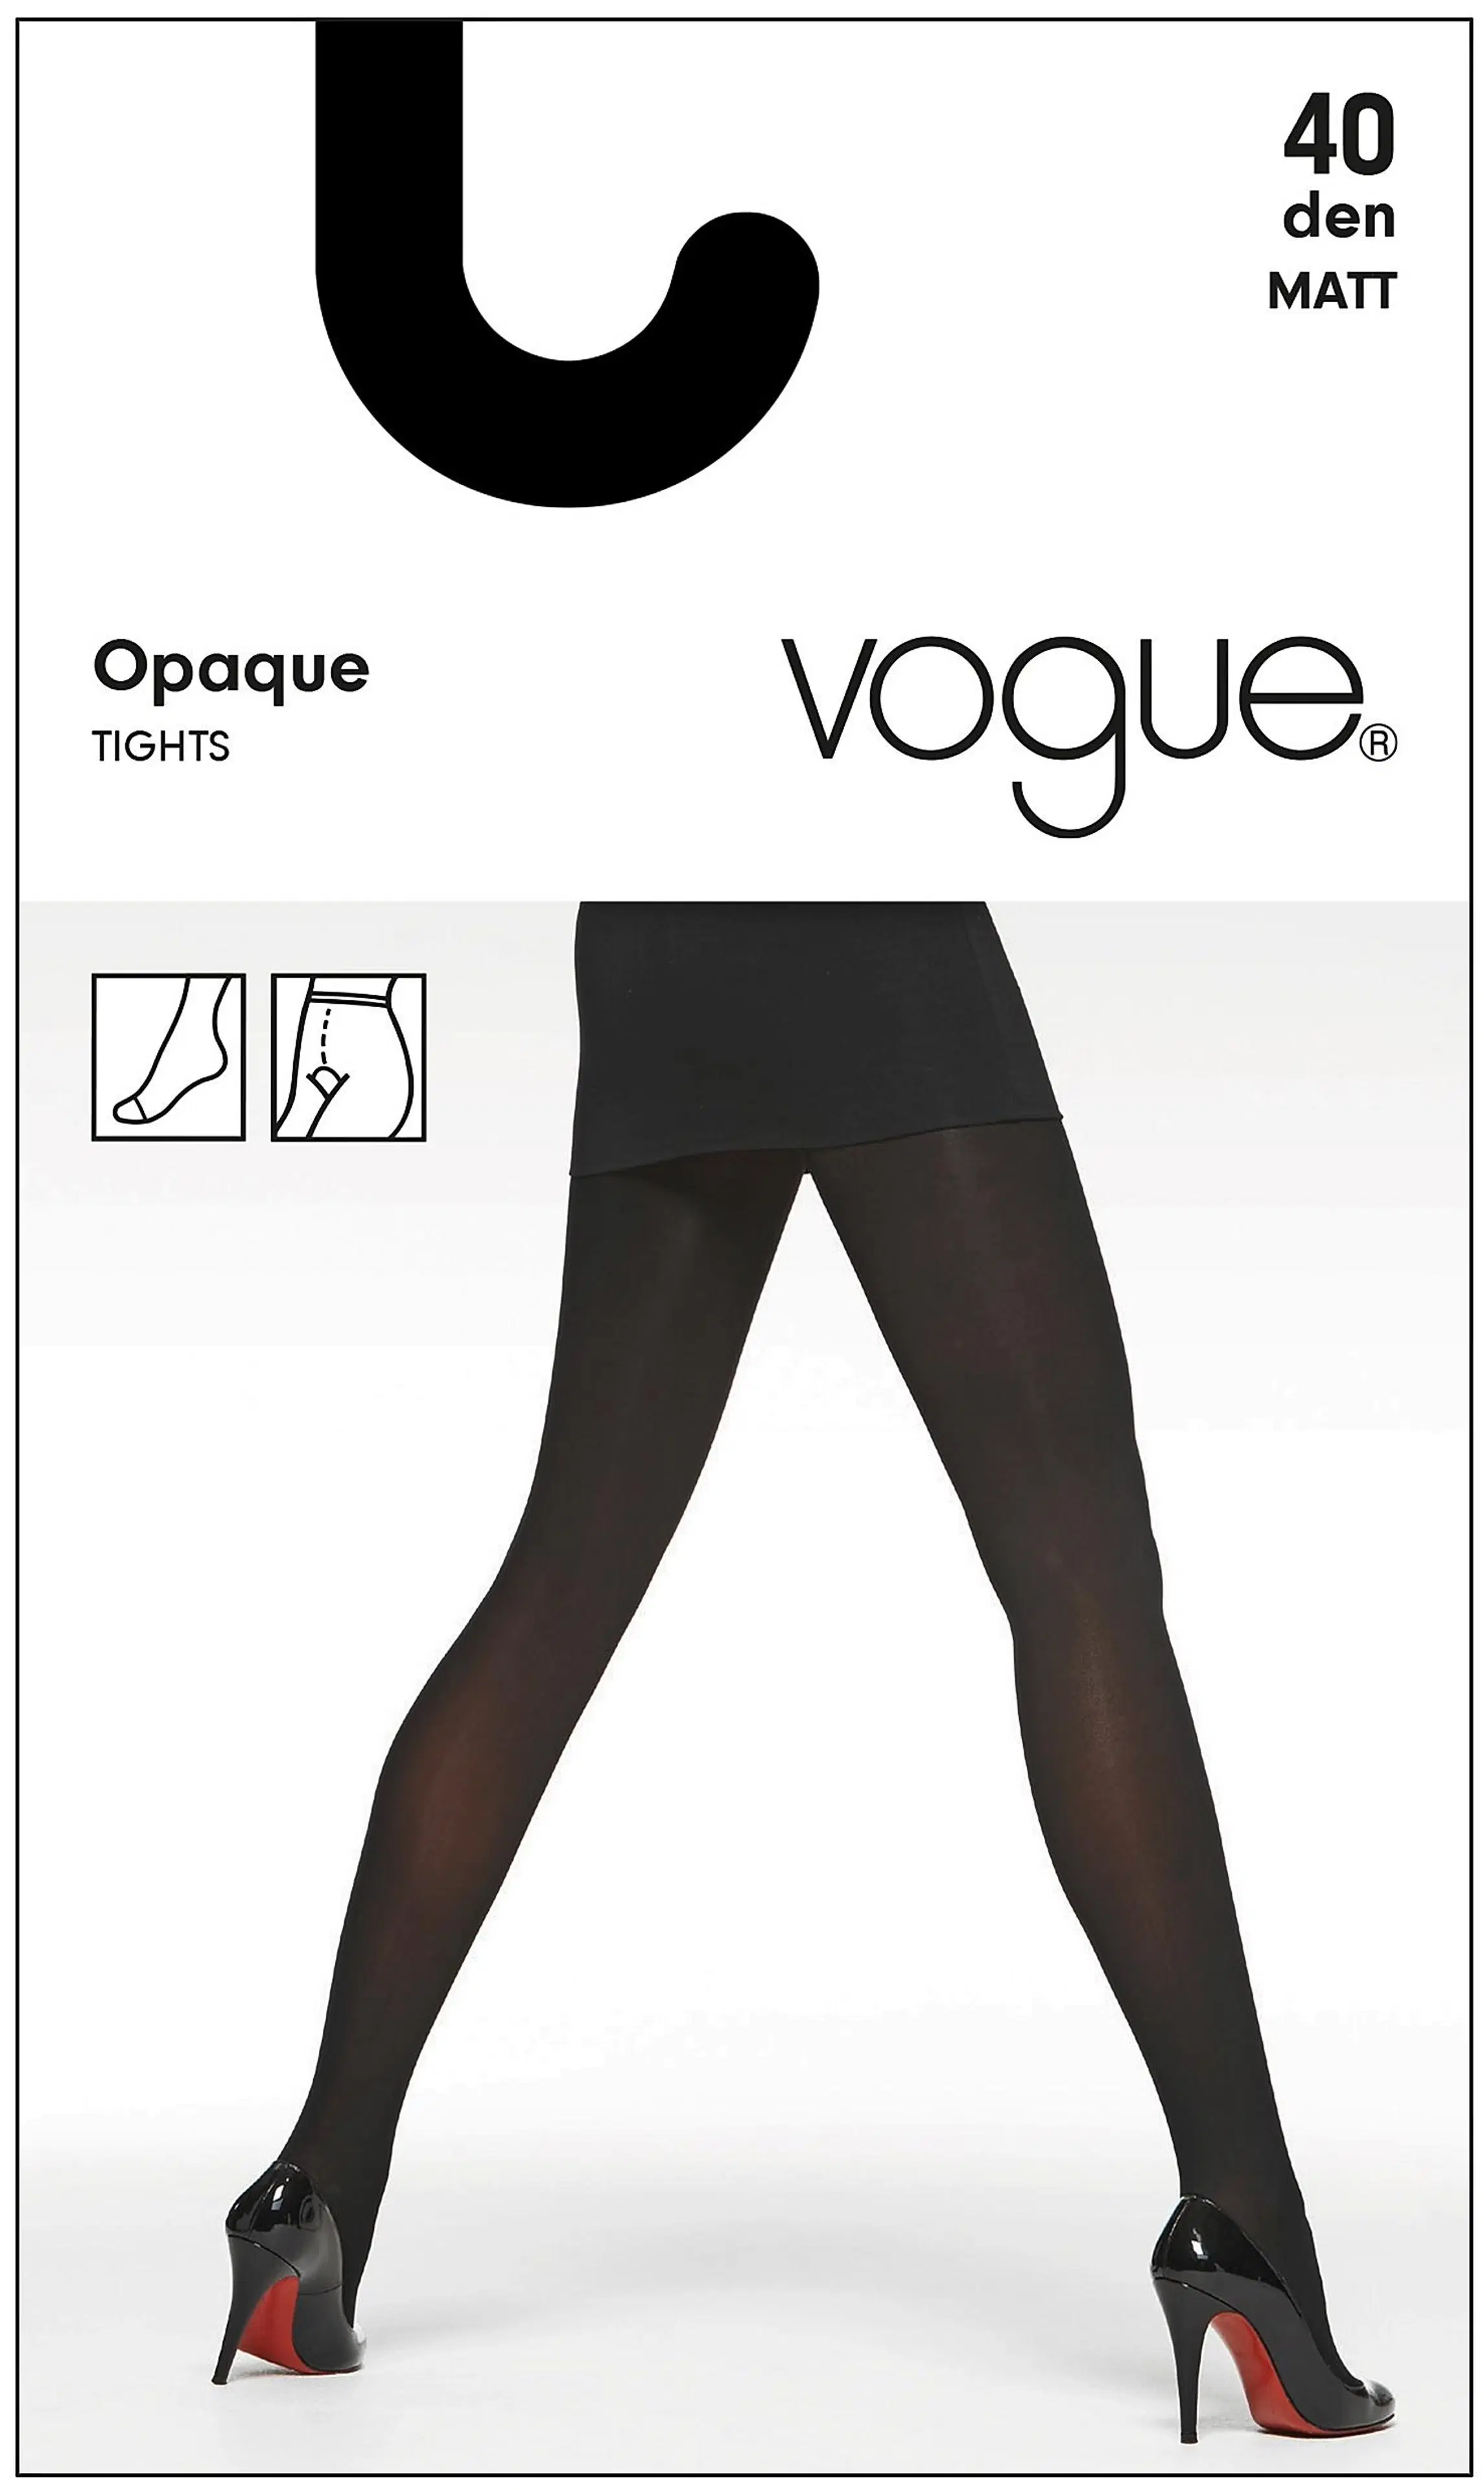 Vogue Opaque sukkahousut 40 den